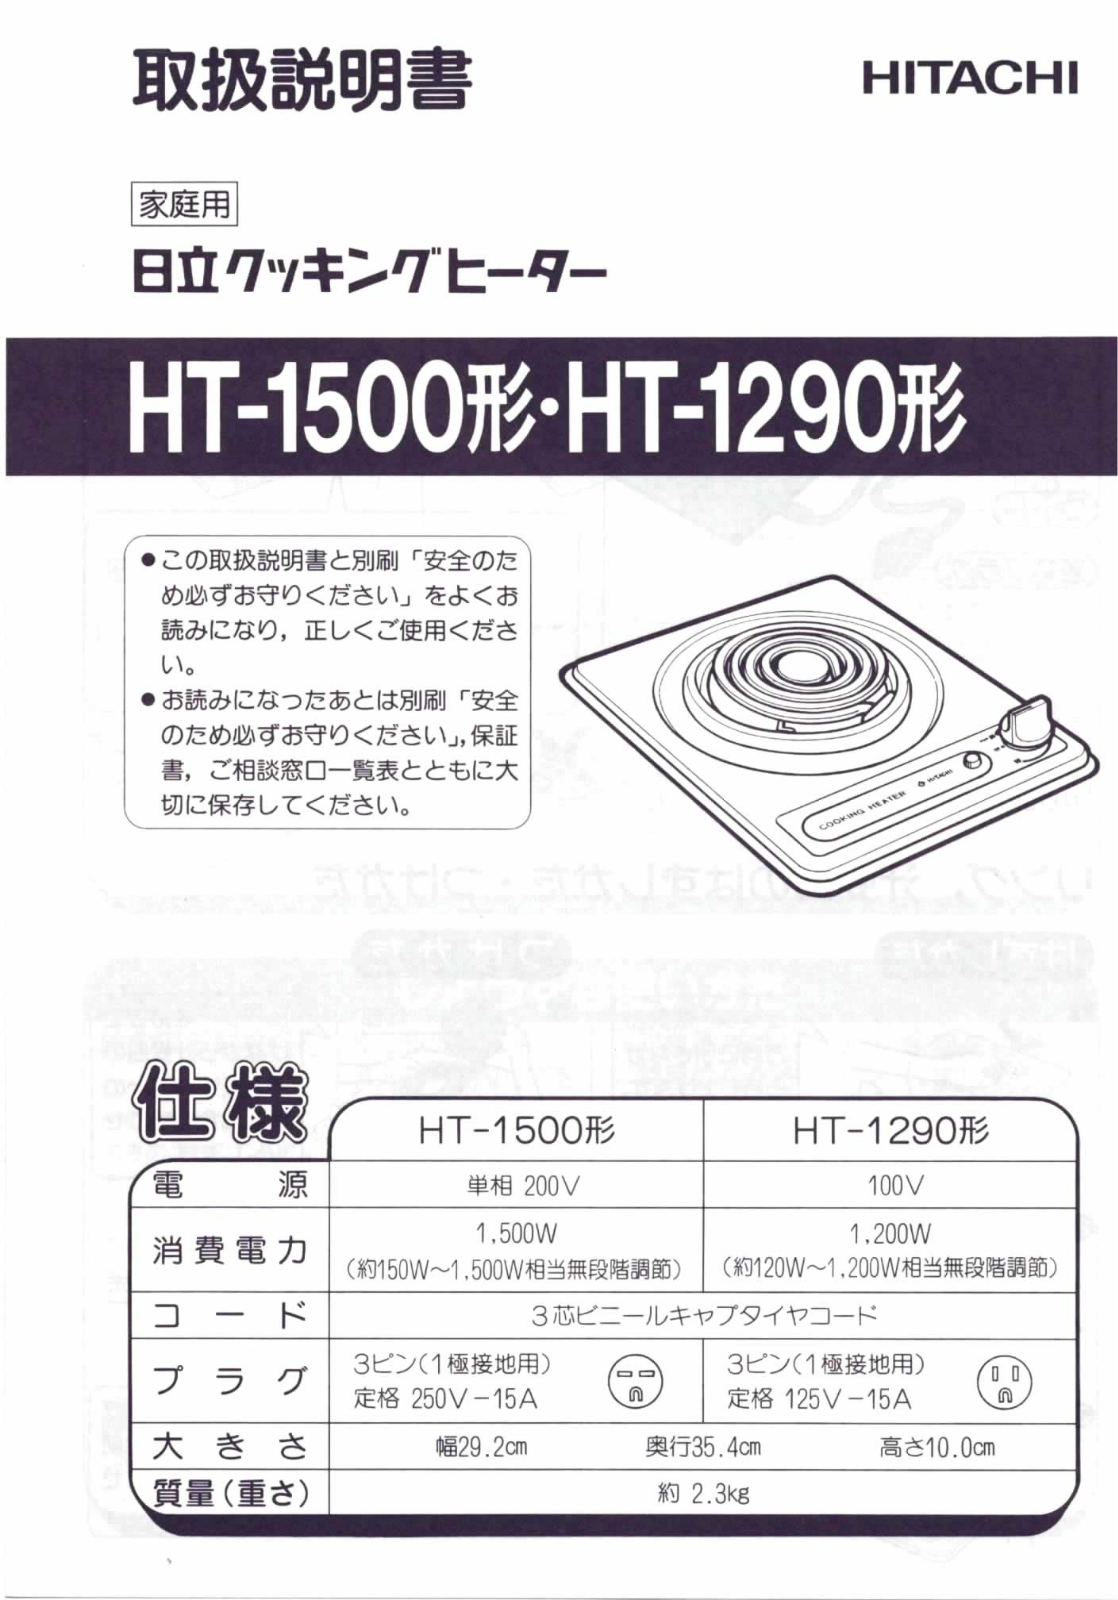 HITACHI HT-1290, HT-1500 User guide